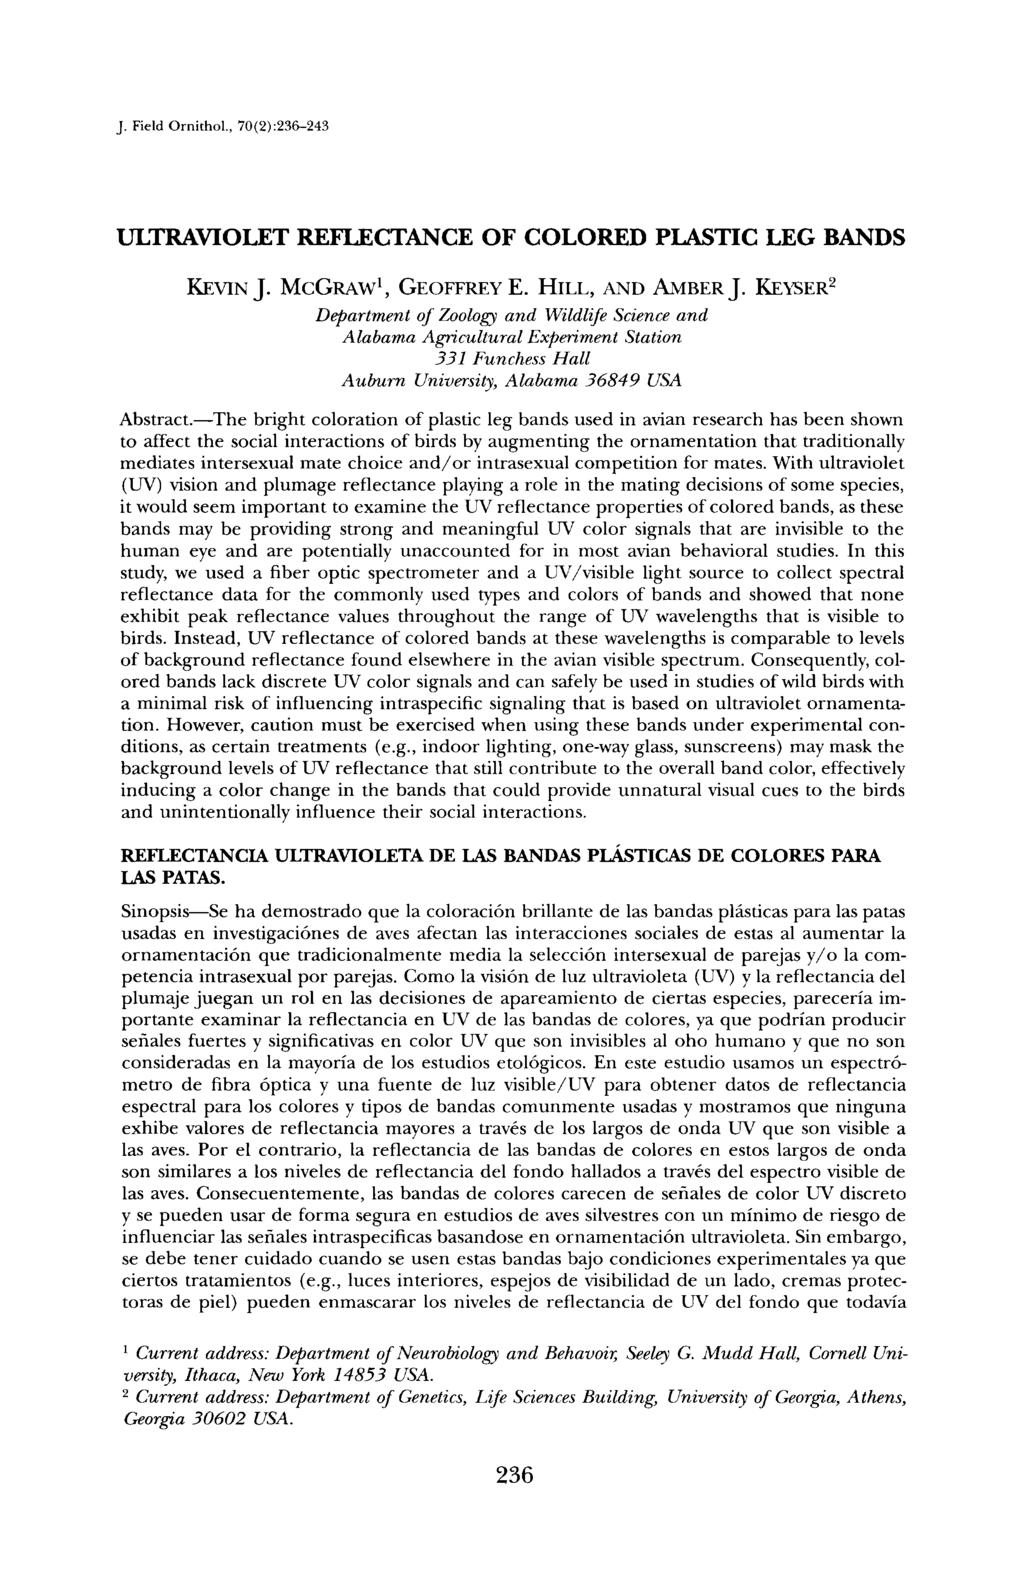 J. Field Ornithol., 70(2):236-243 ULTRAVIOLET REFLECTANCE OF COLORED PLASTIC LEG BANDS K wrq J. McGP, W, GEOFFREY E. HILL, AND AMBER J.